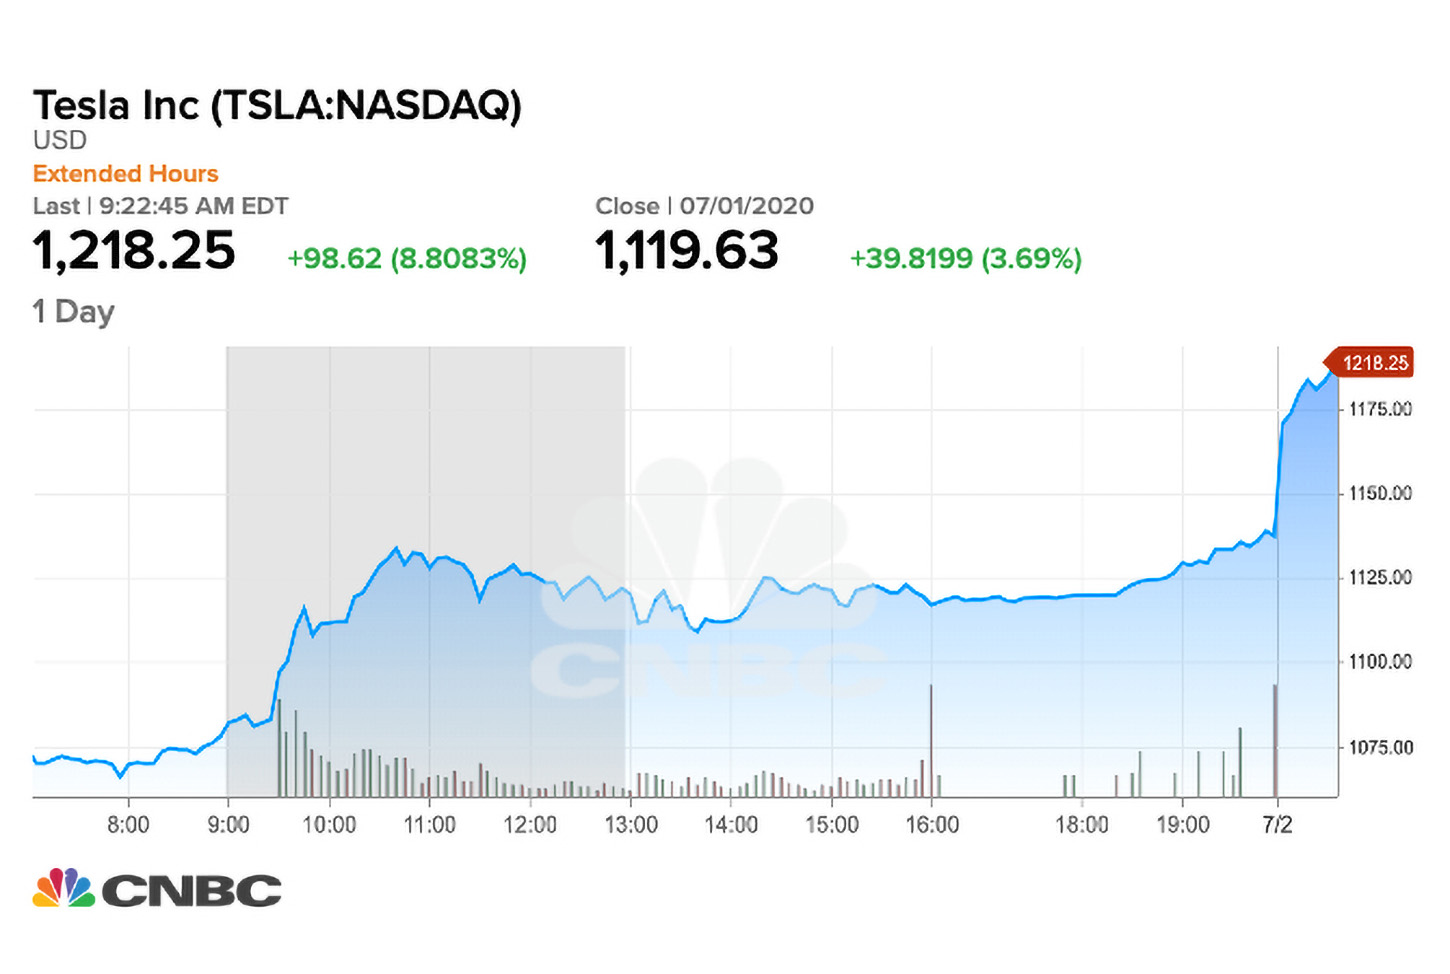 The stock price of Tesla surpassed $1,200 in pre-market